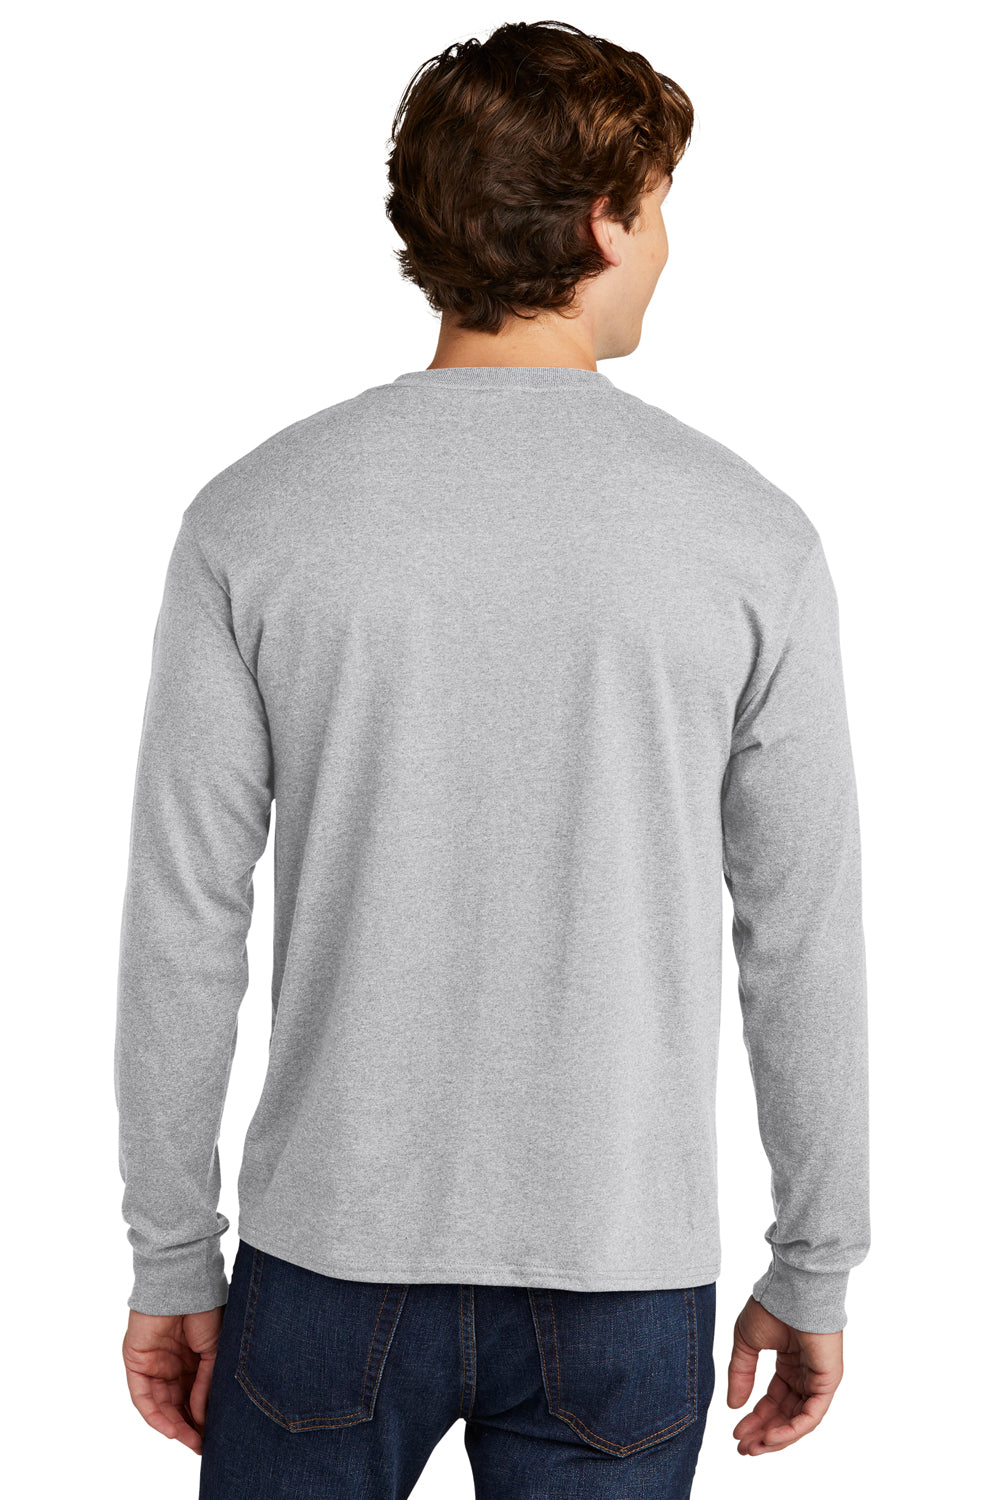 Hanes 5286 Mens ComfortSoft Long Sleeve Crewneck T-Shirt Ash Grey Back